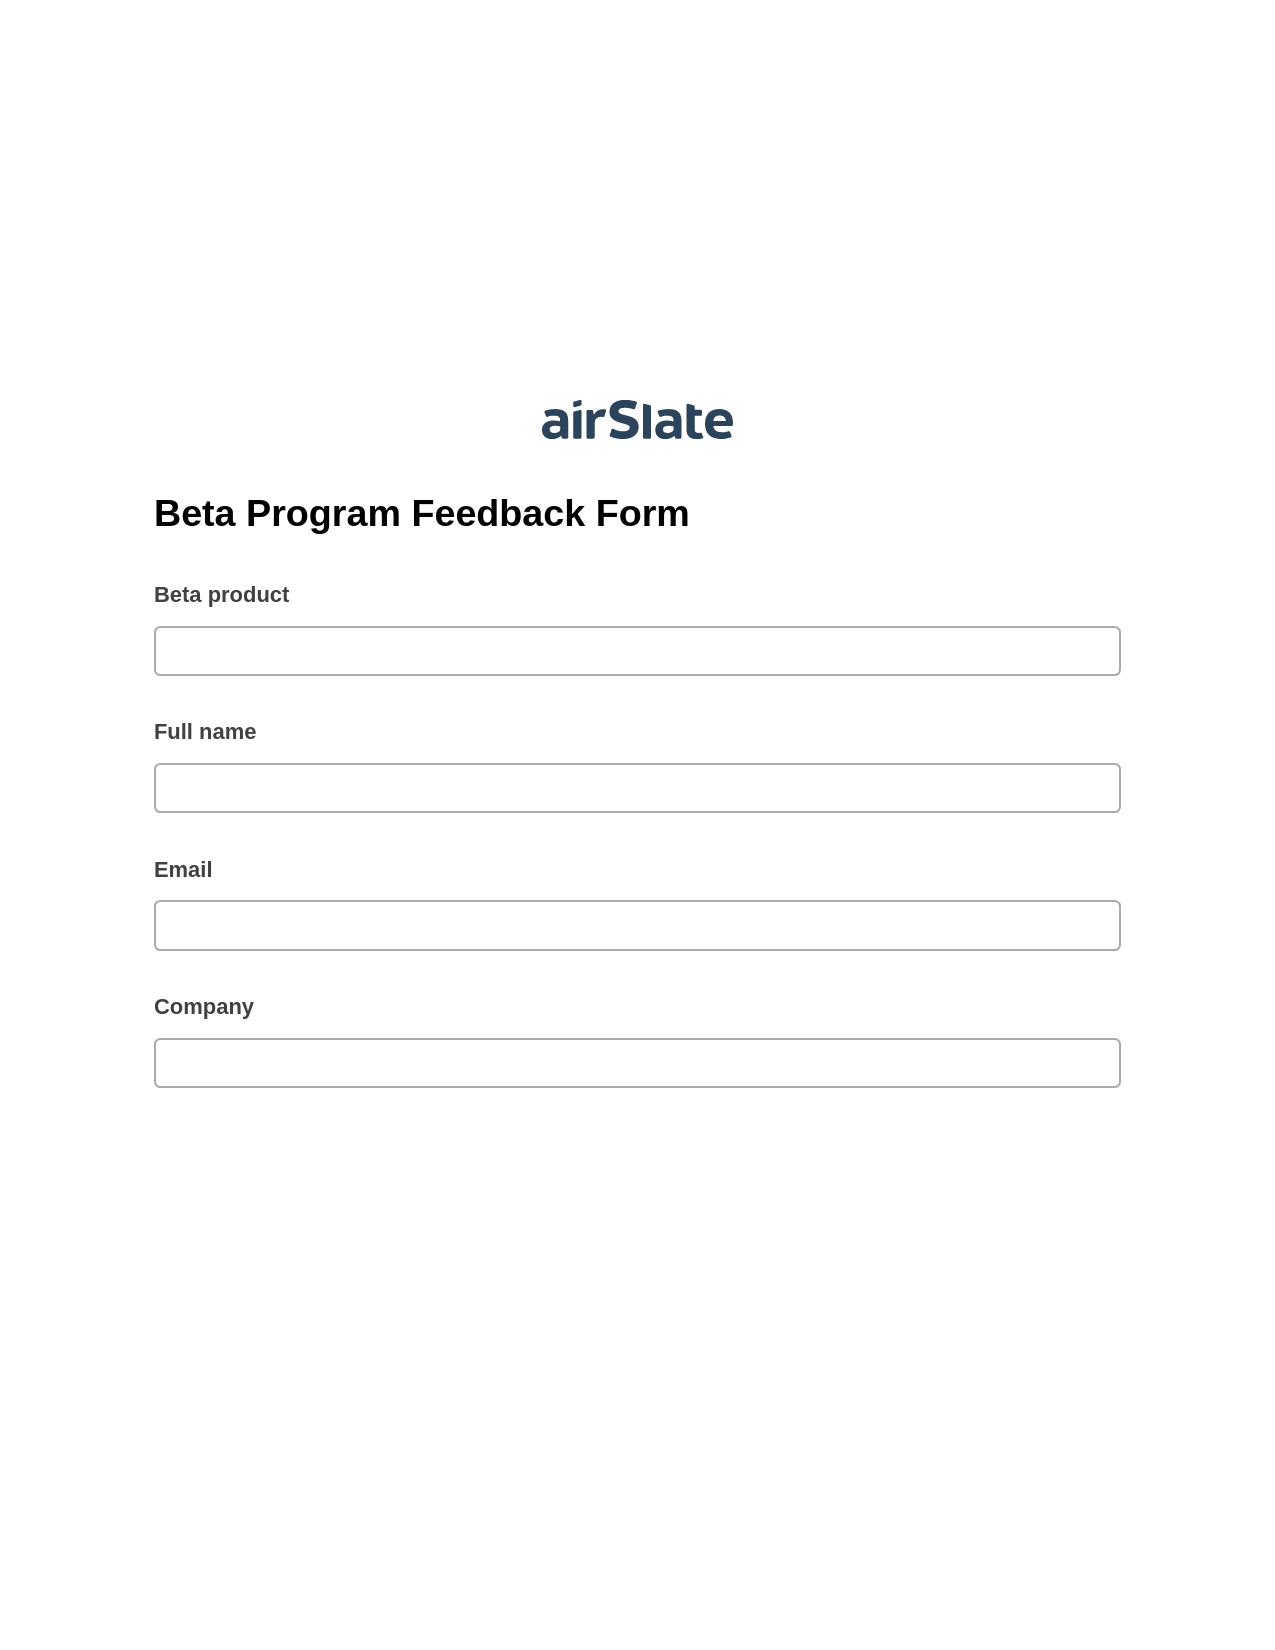 Multirole Beta Program Feedback Form Pre-fill Slate from MS Dynamics 365 Records Bot, Assign Slate Name Bot, Slack Notification Postfinish Bot